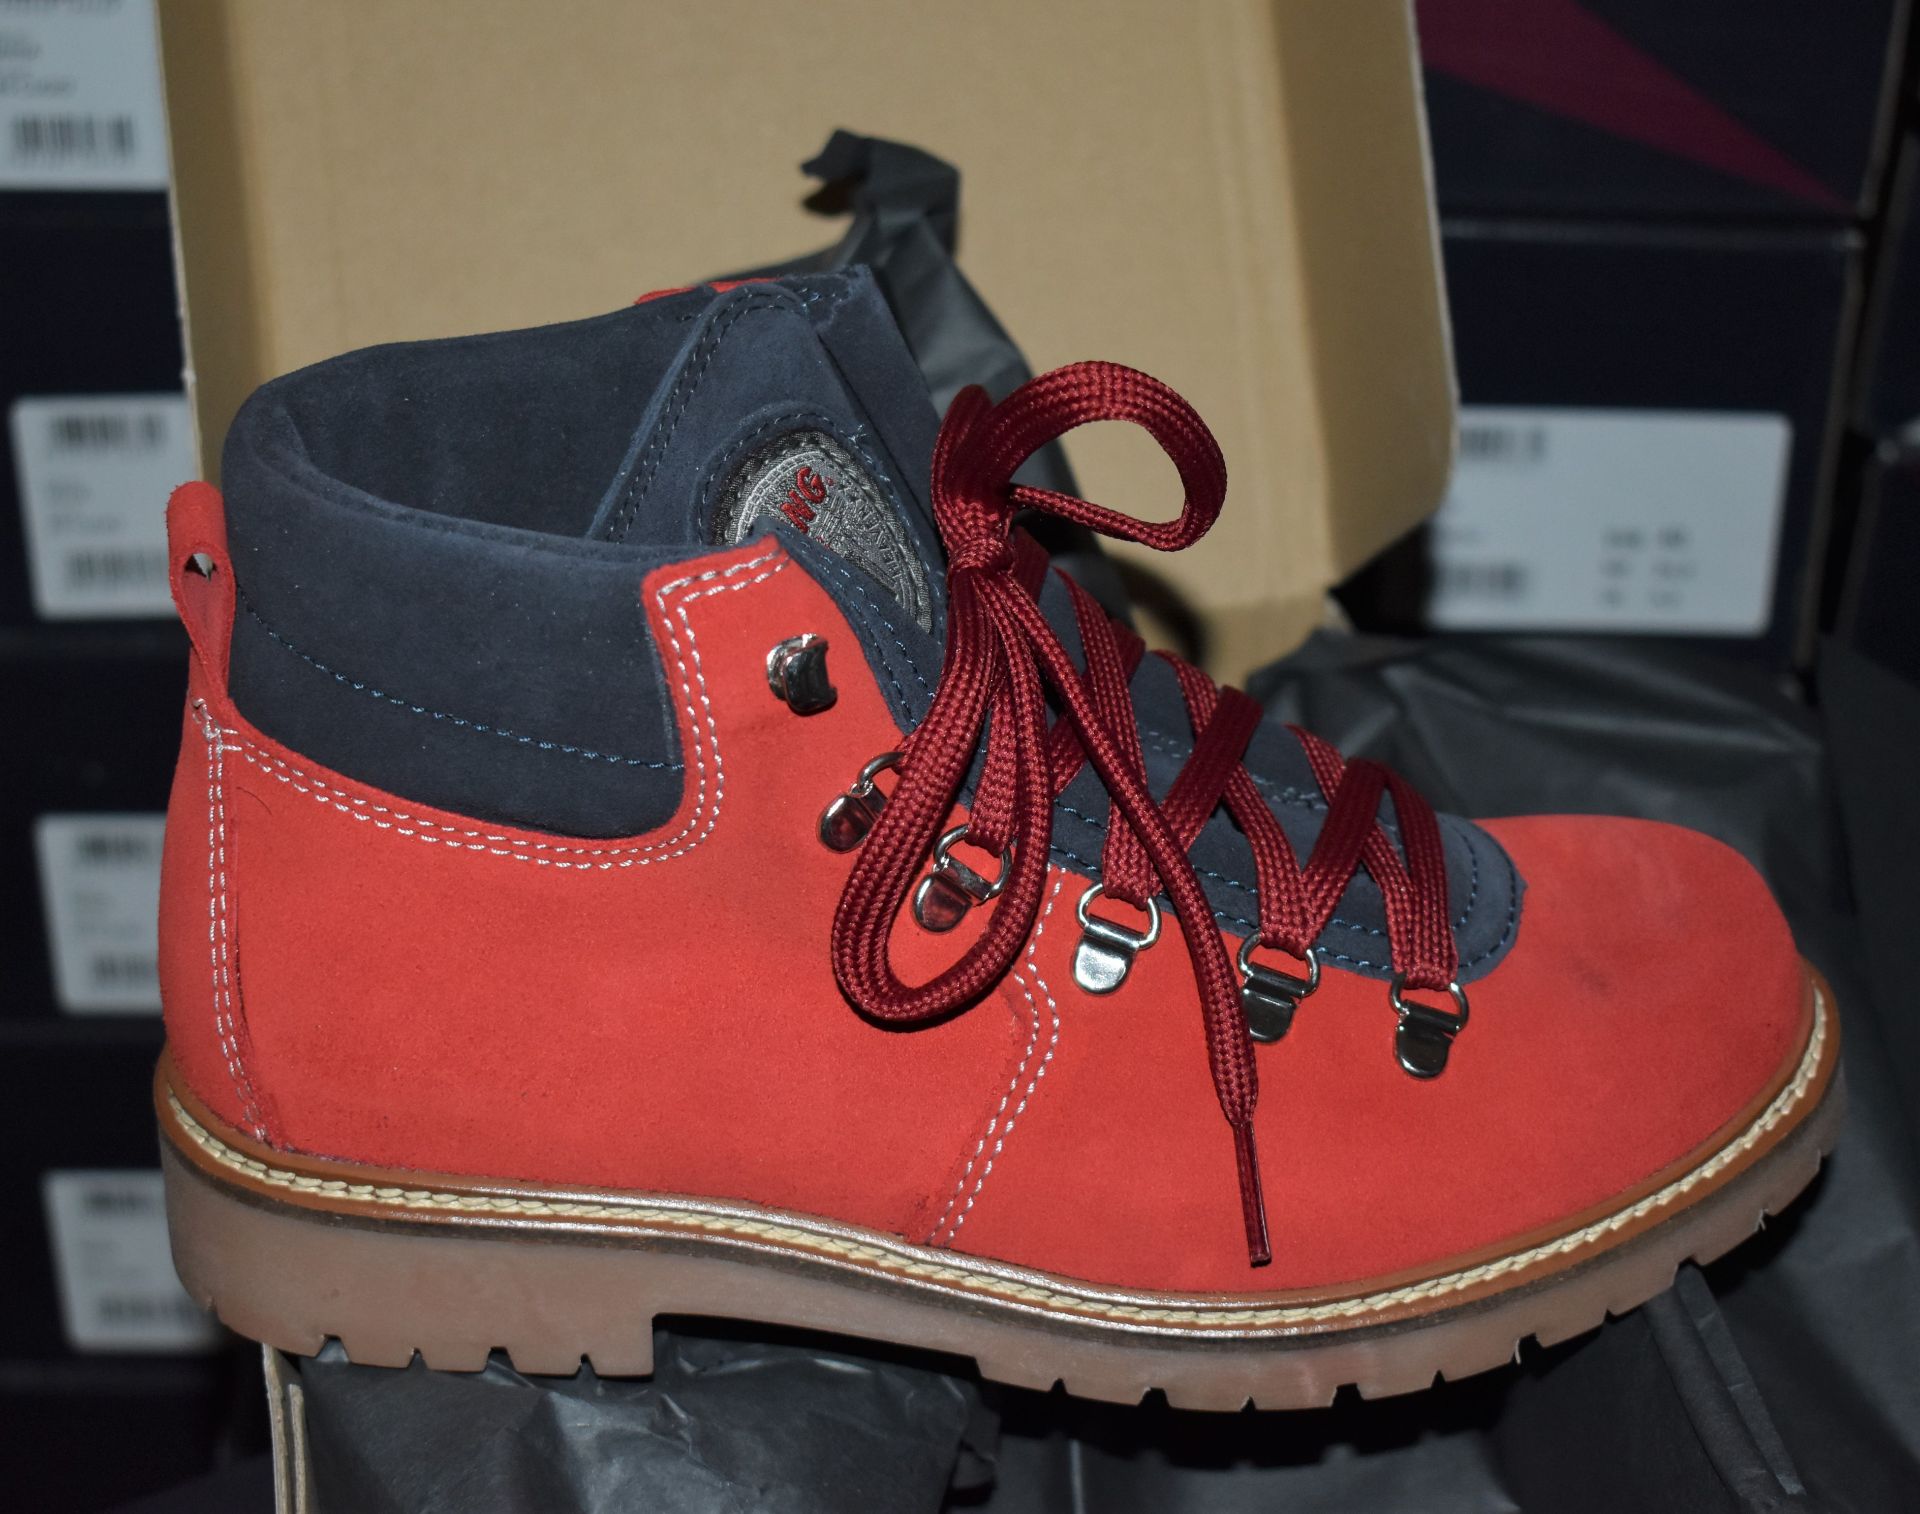 1 x Pair of Designer Olang Merano BTX 815 Rosso Women's Winter Boots - Euro Size 37 - Brand New